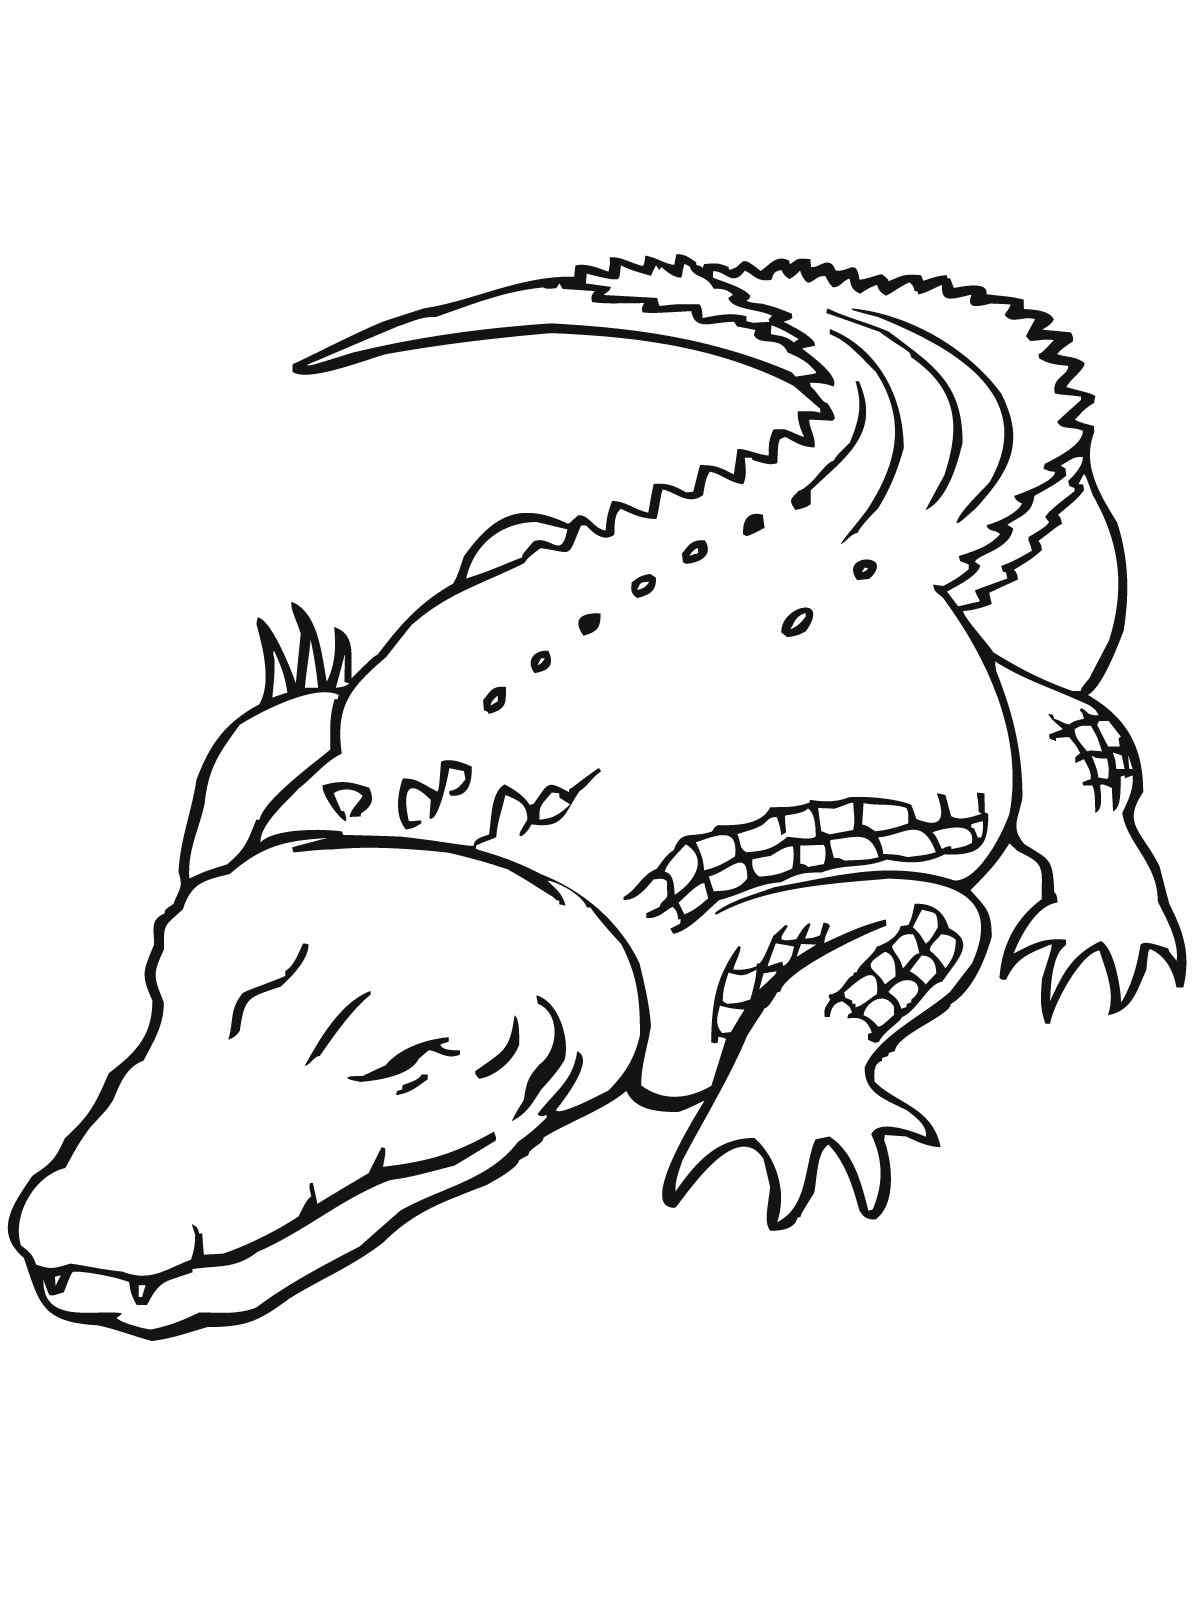 Crocodile To Print Coloring Page